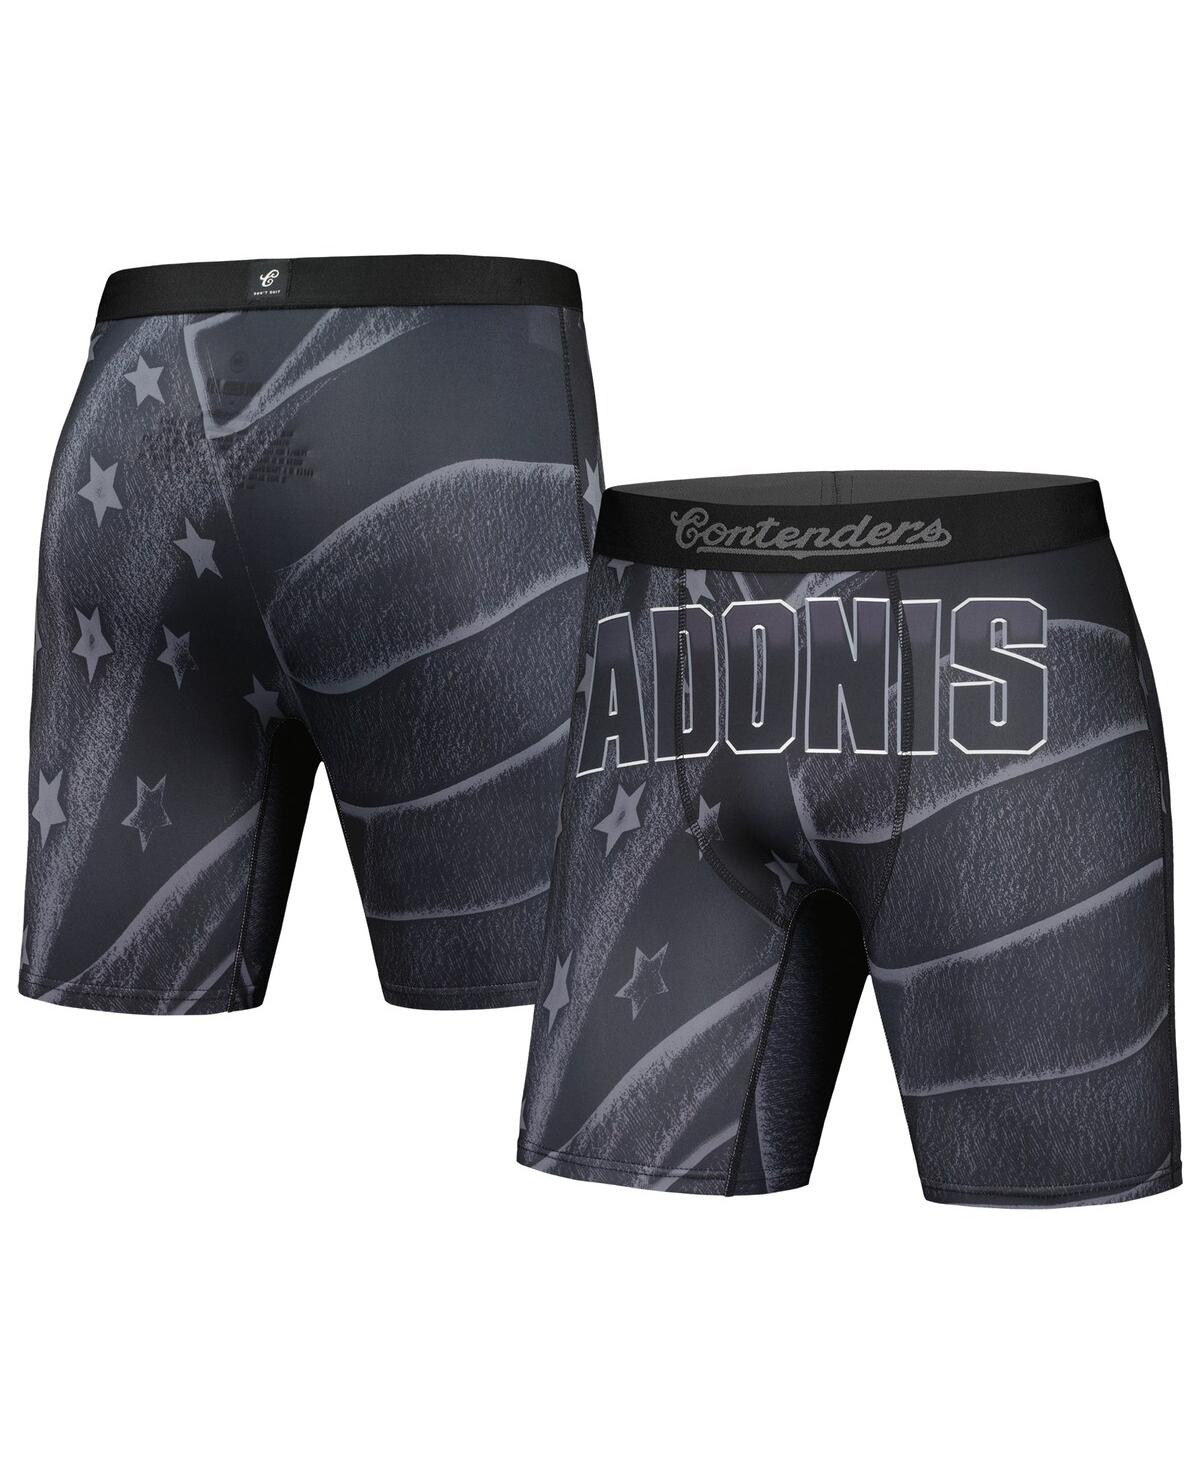 Men's Contenders Clothing Black Creed Iii Adonis Flag Boxer Briefs - Black